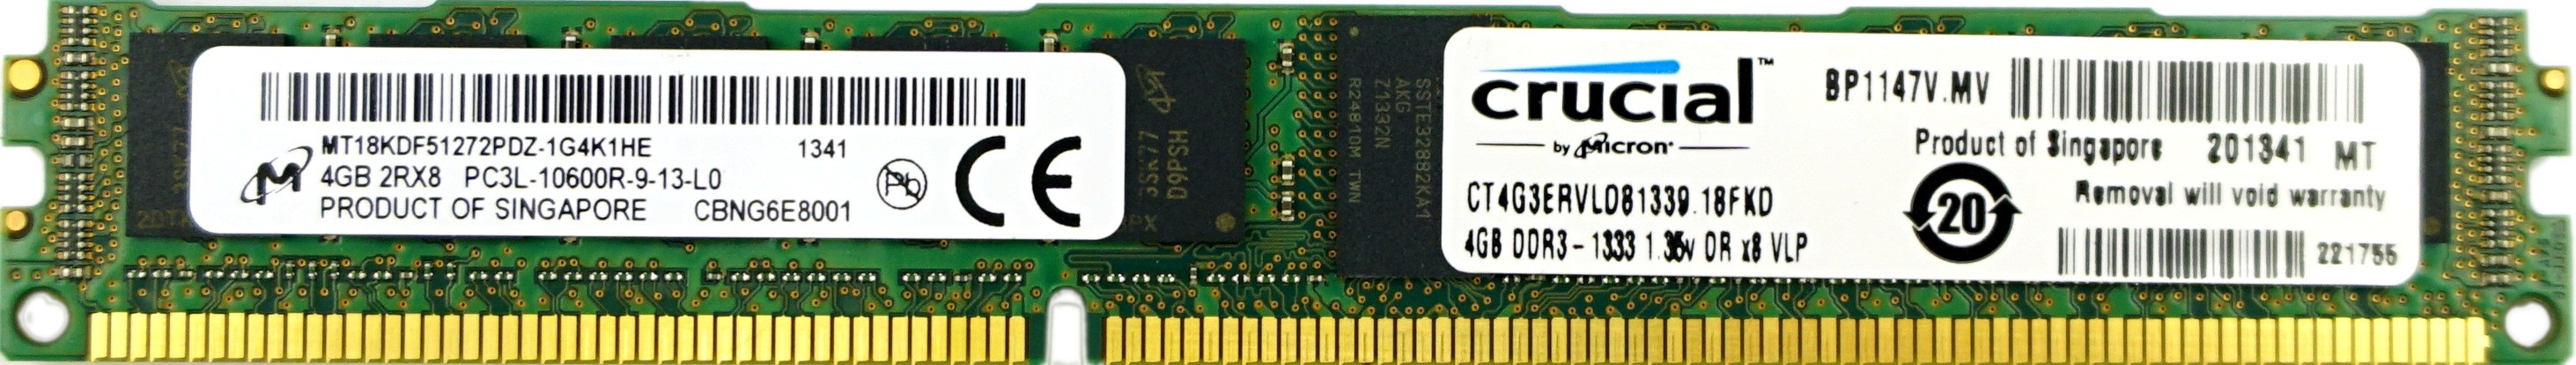 Micron - 4GB PC3L-10600R (DDR3 Low-Power-1333Mhz, 2RX8) VLP